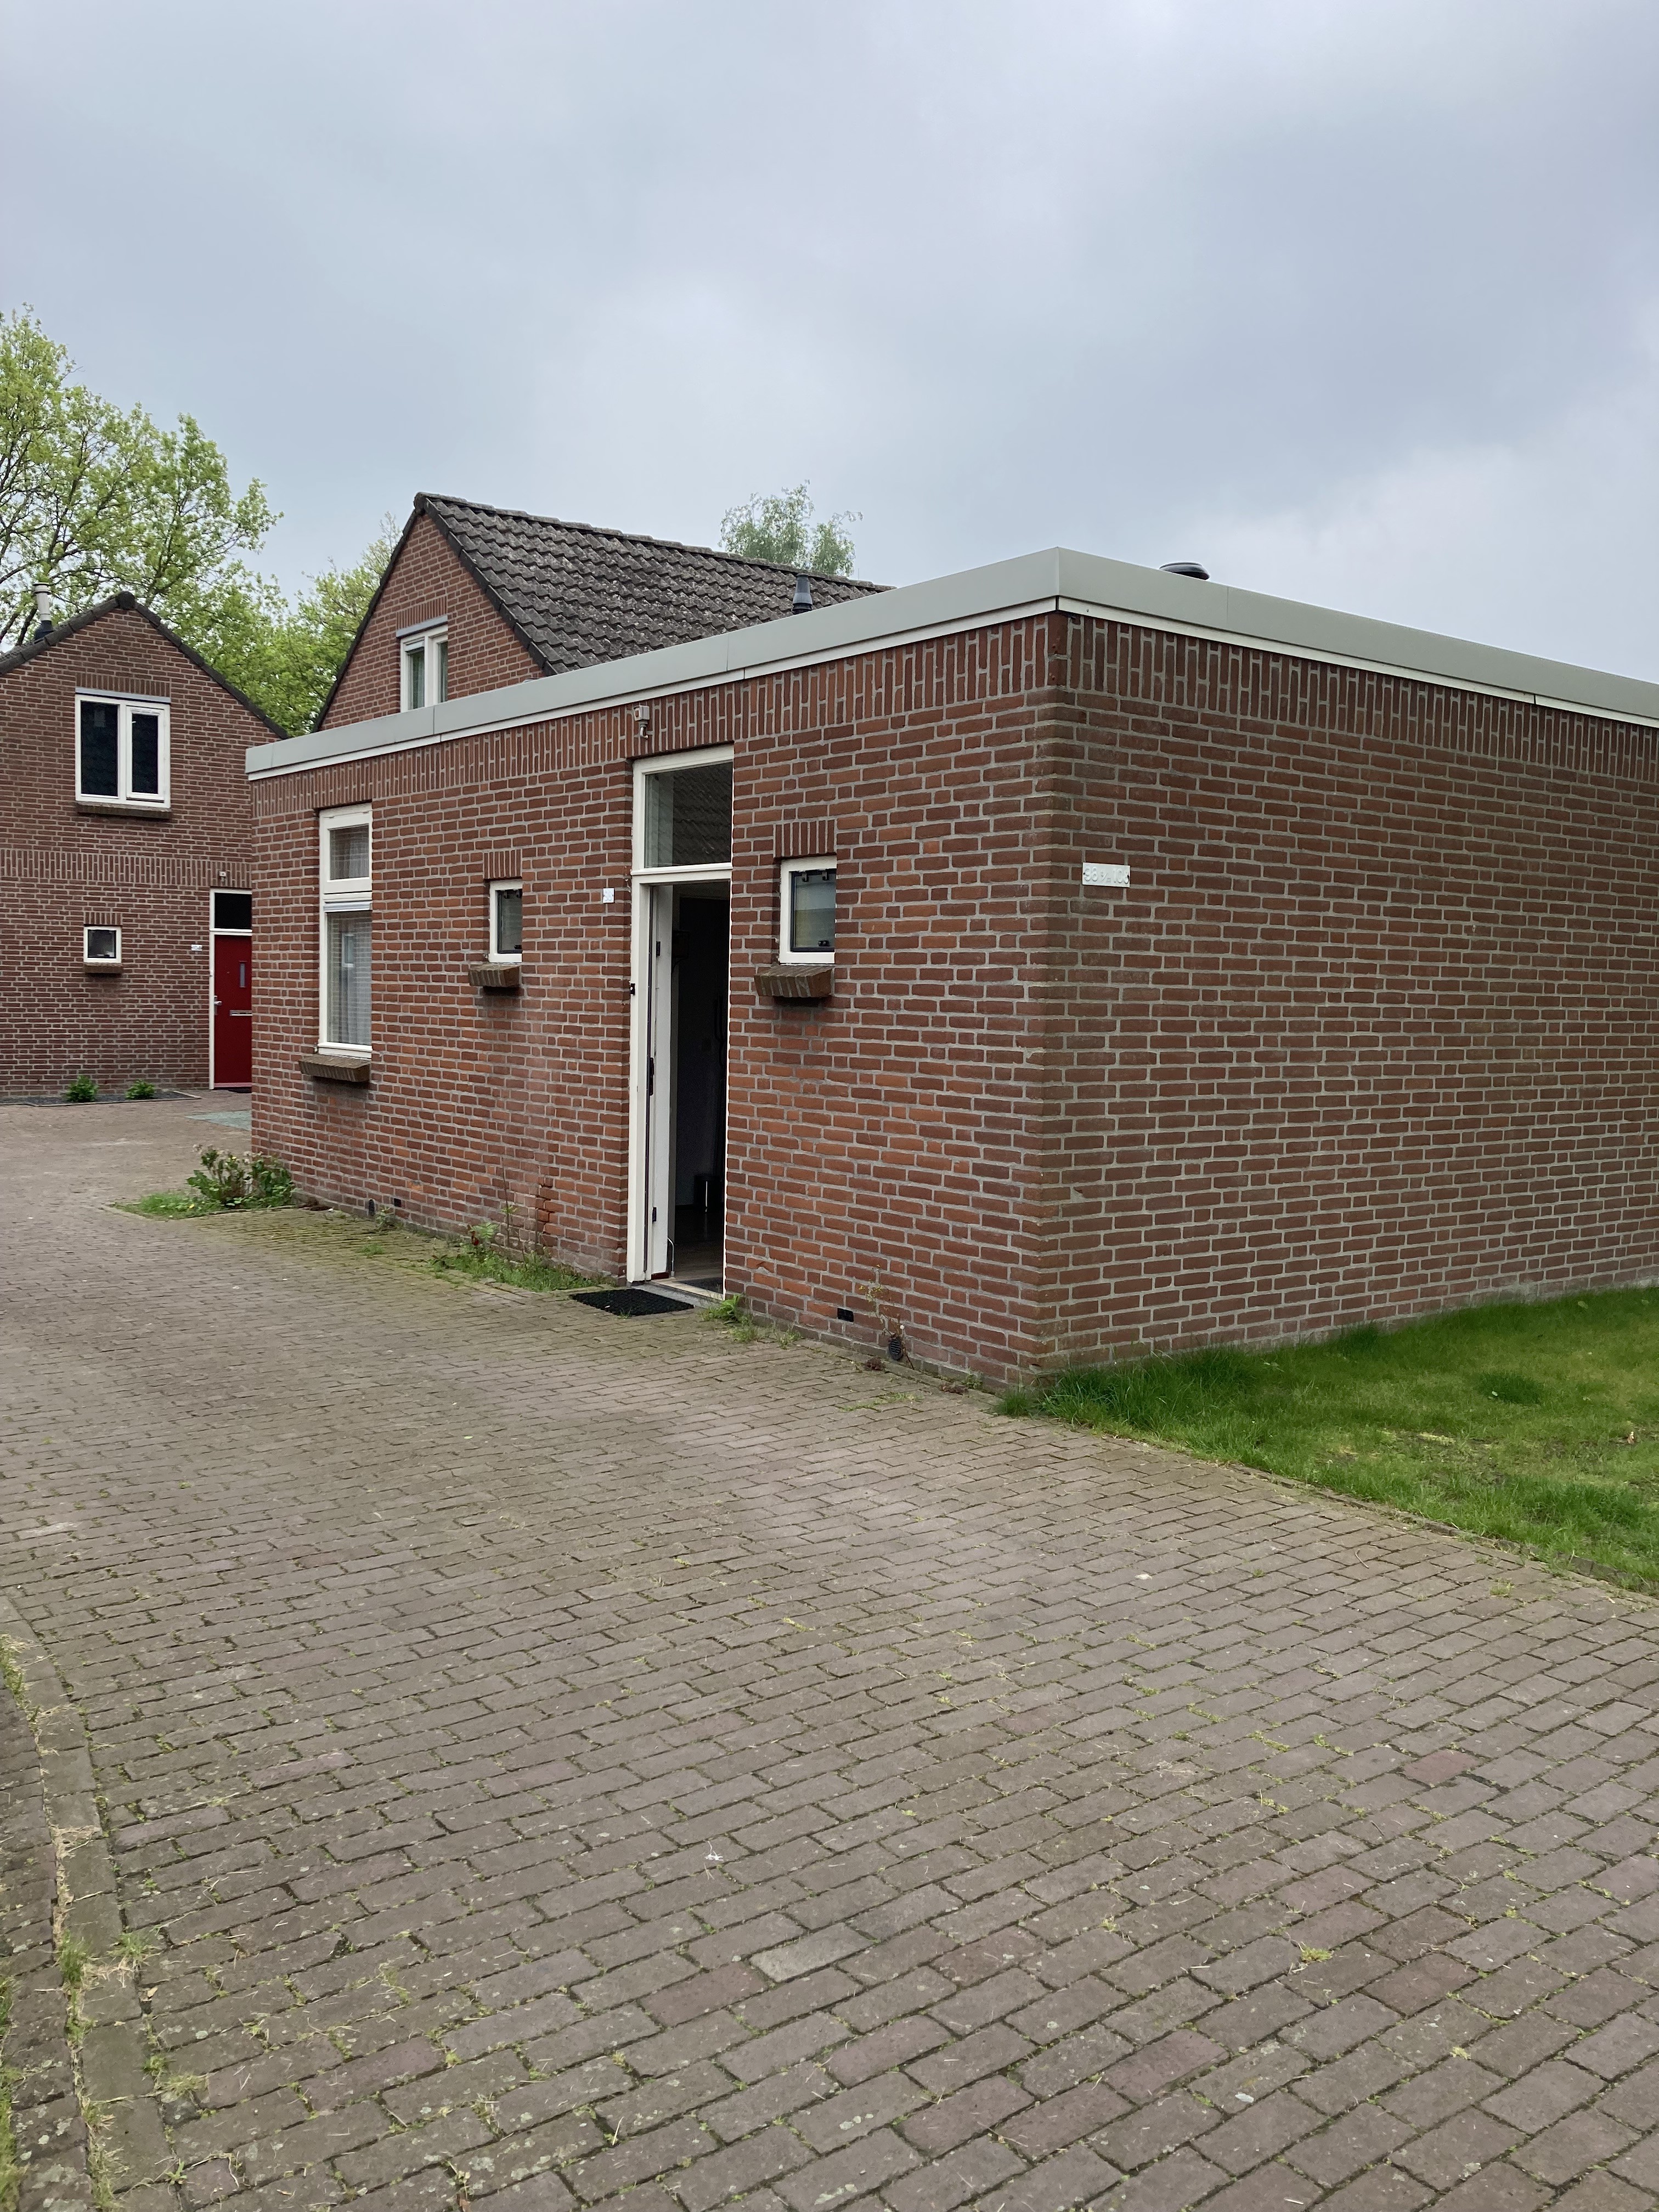 Schutsboom 98, 5081 PC Hilvarenbeek, Nederland